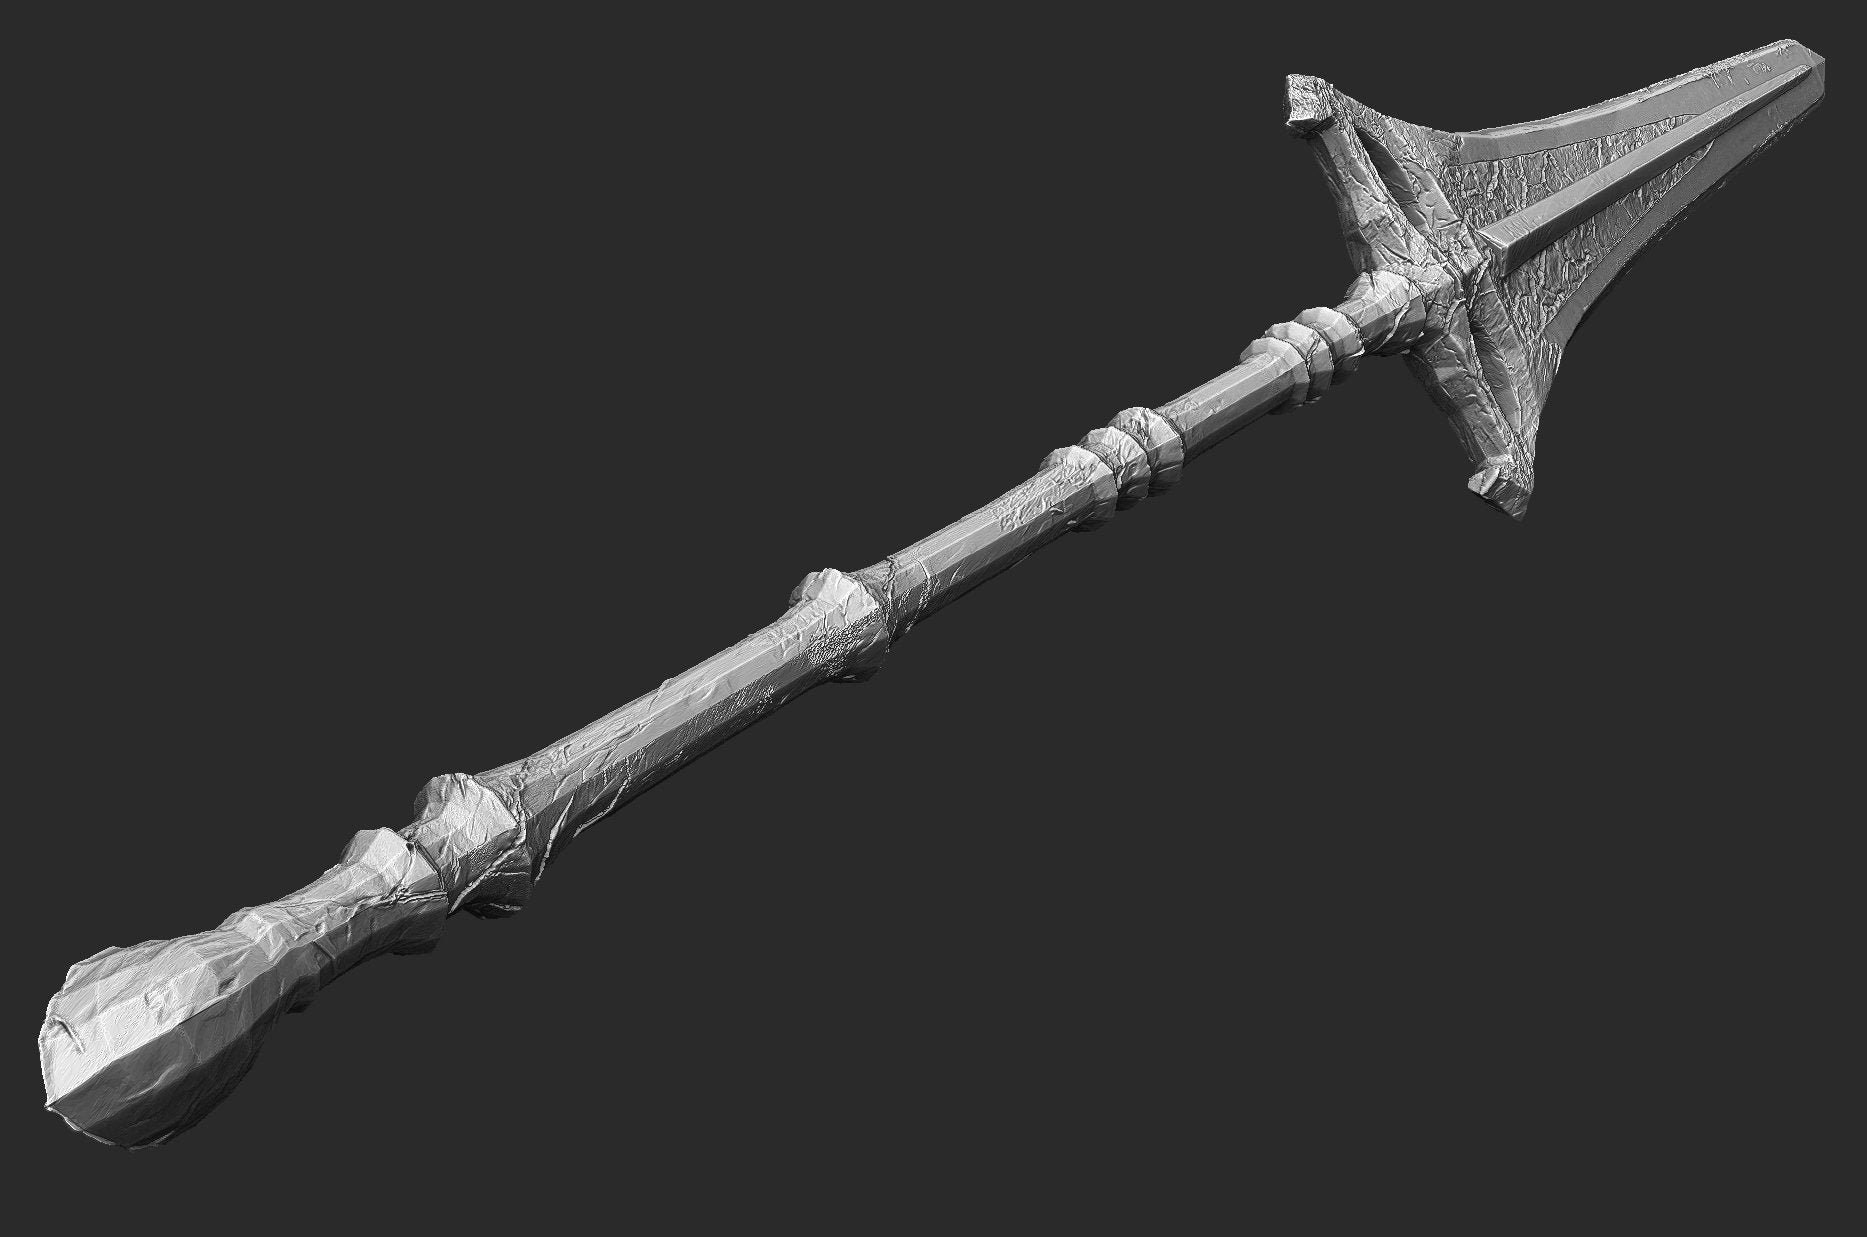 Dragonslayer Dice Sword: anime D&D accessories